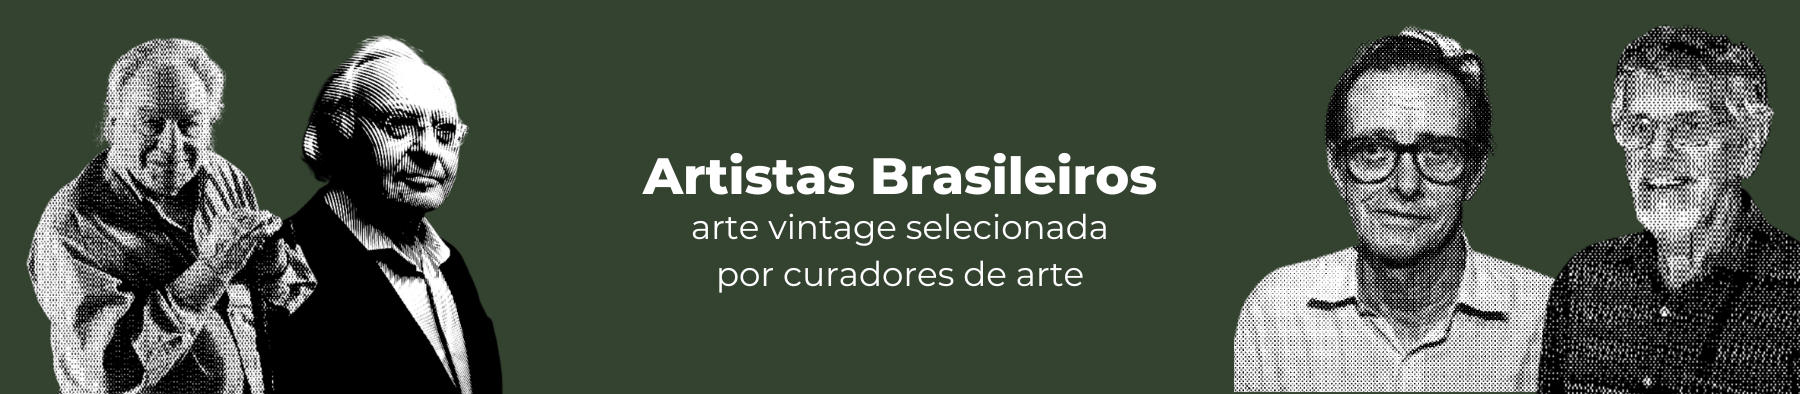 Artistas Brasileiros - Arte Vintage